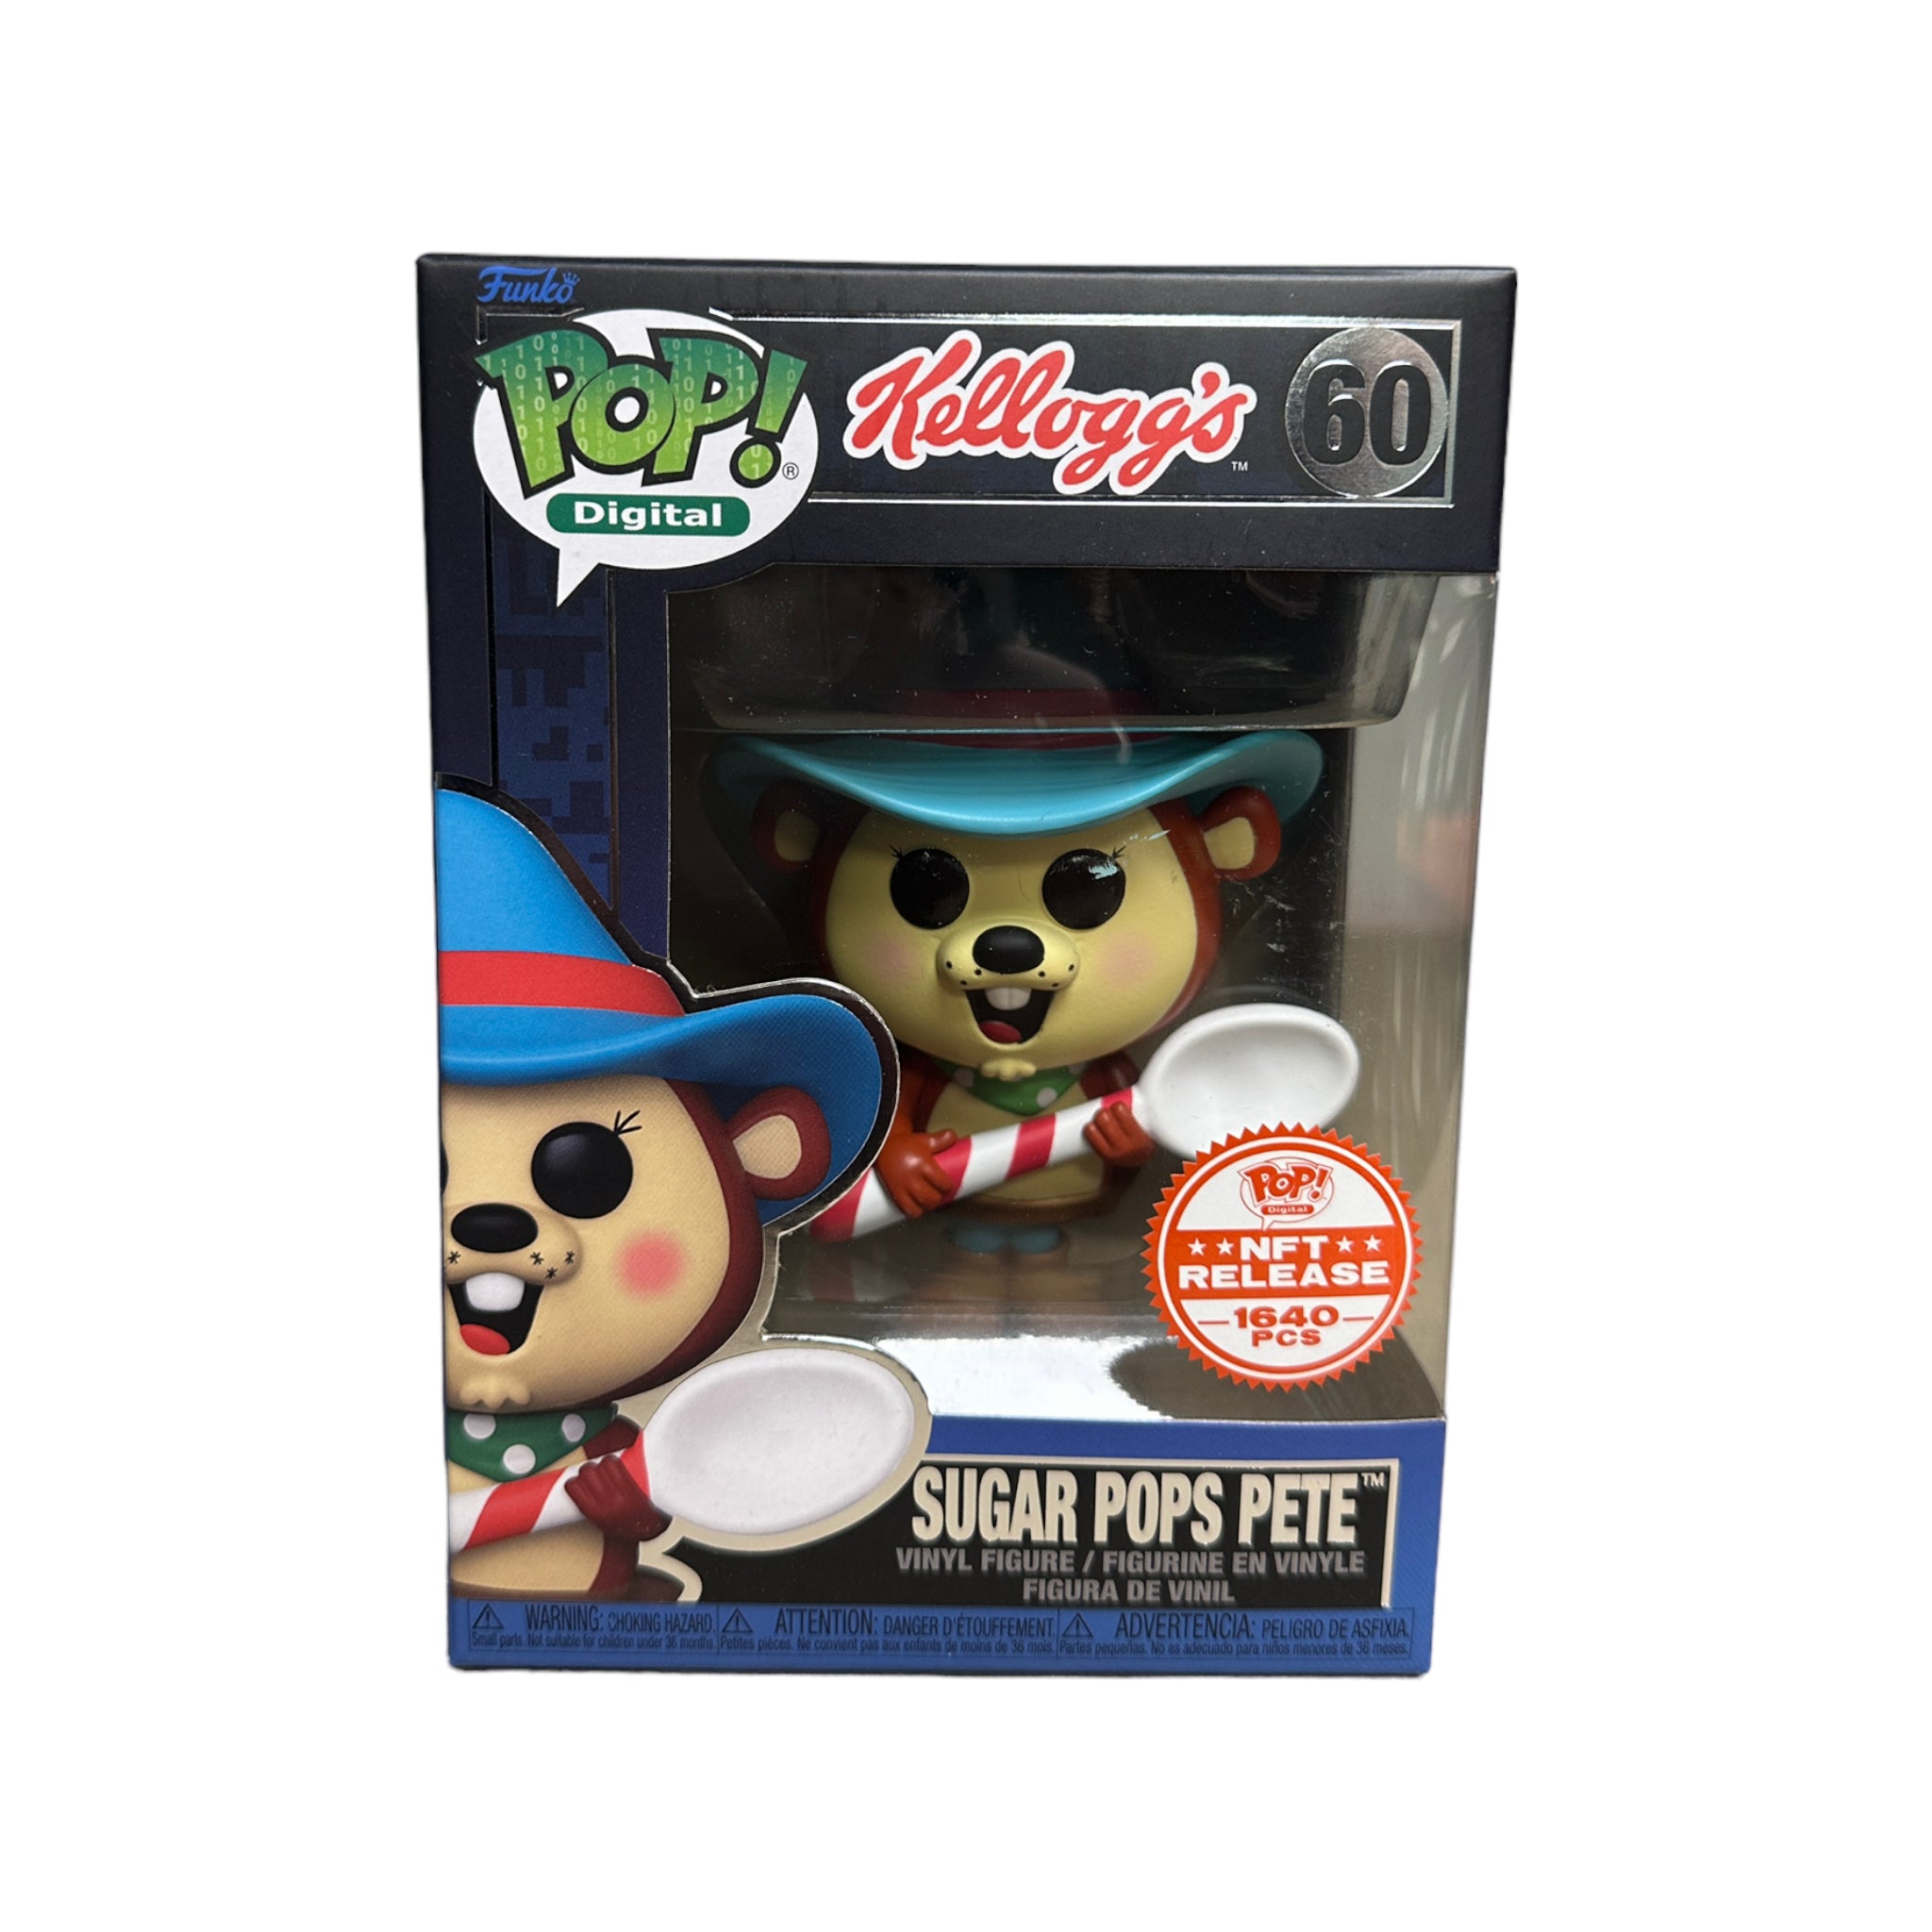 Sugar Pops Pete #60 Funko Pop! - Kellogg's - NFT Release Exclusive LE1640 Pcs - Condition 8.75/10